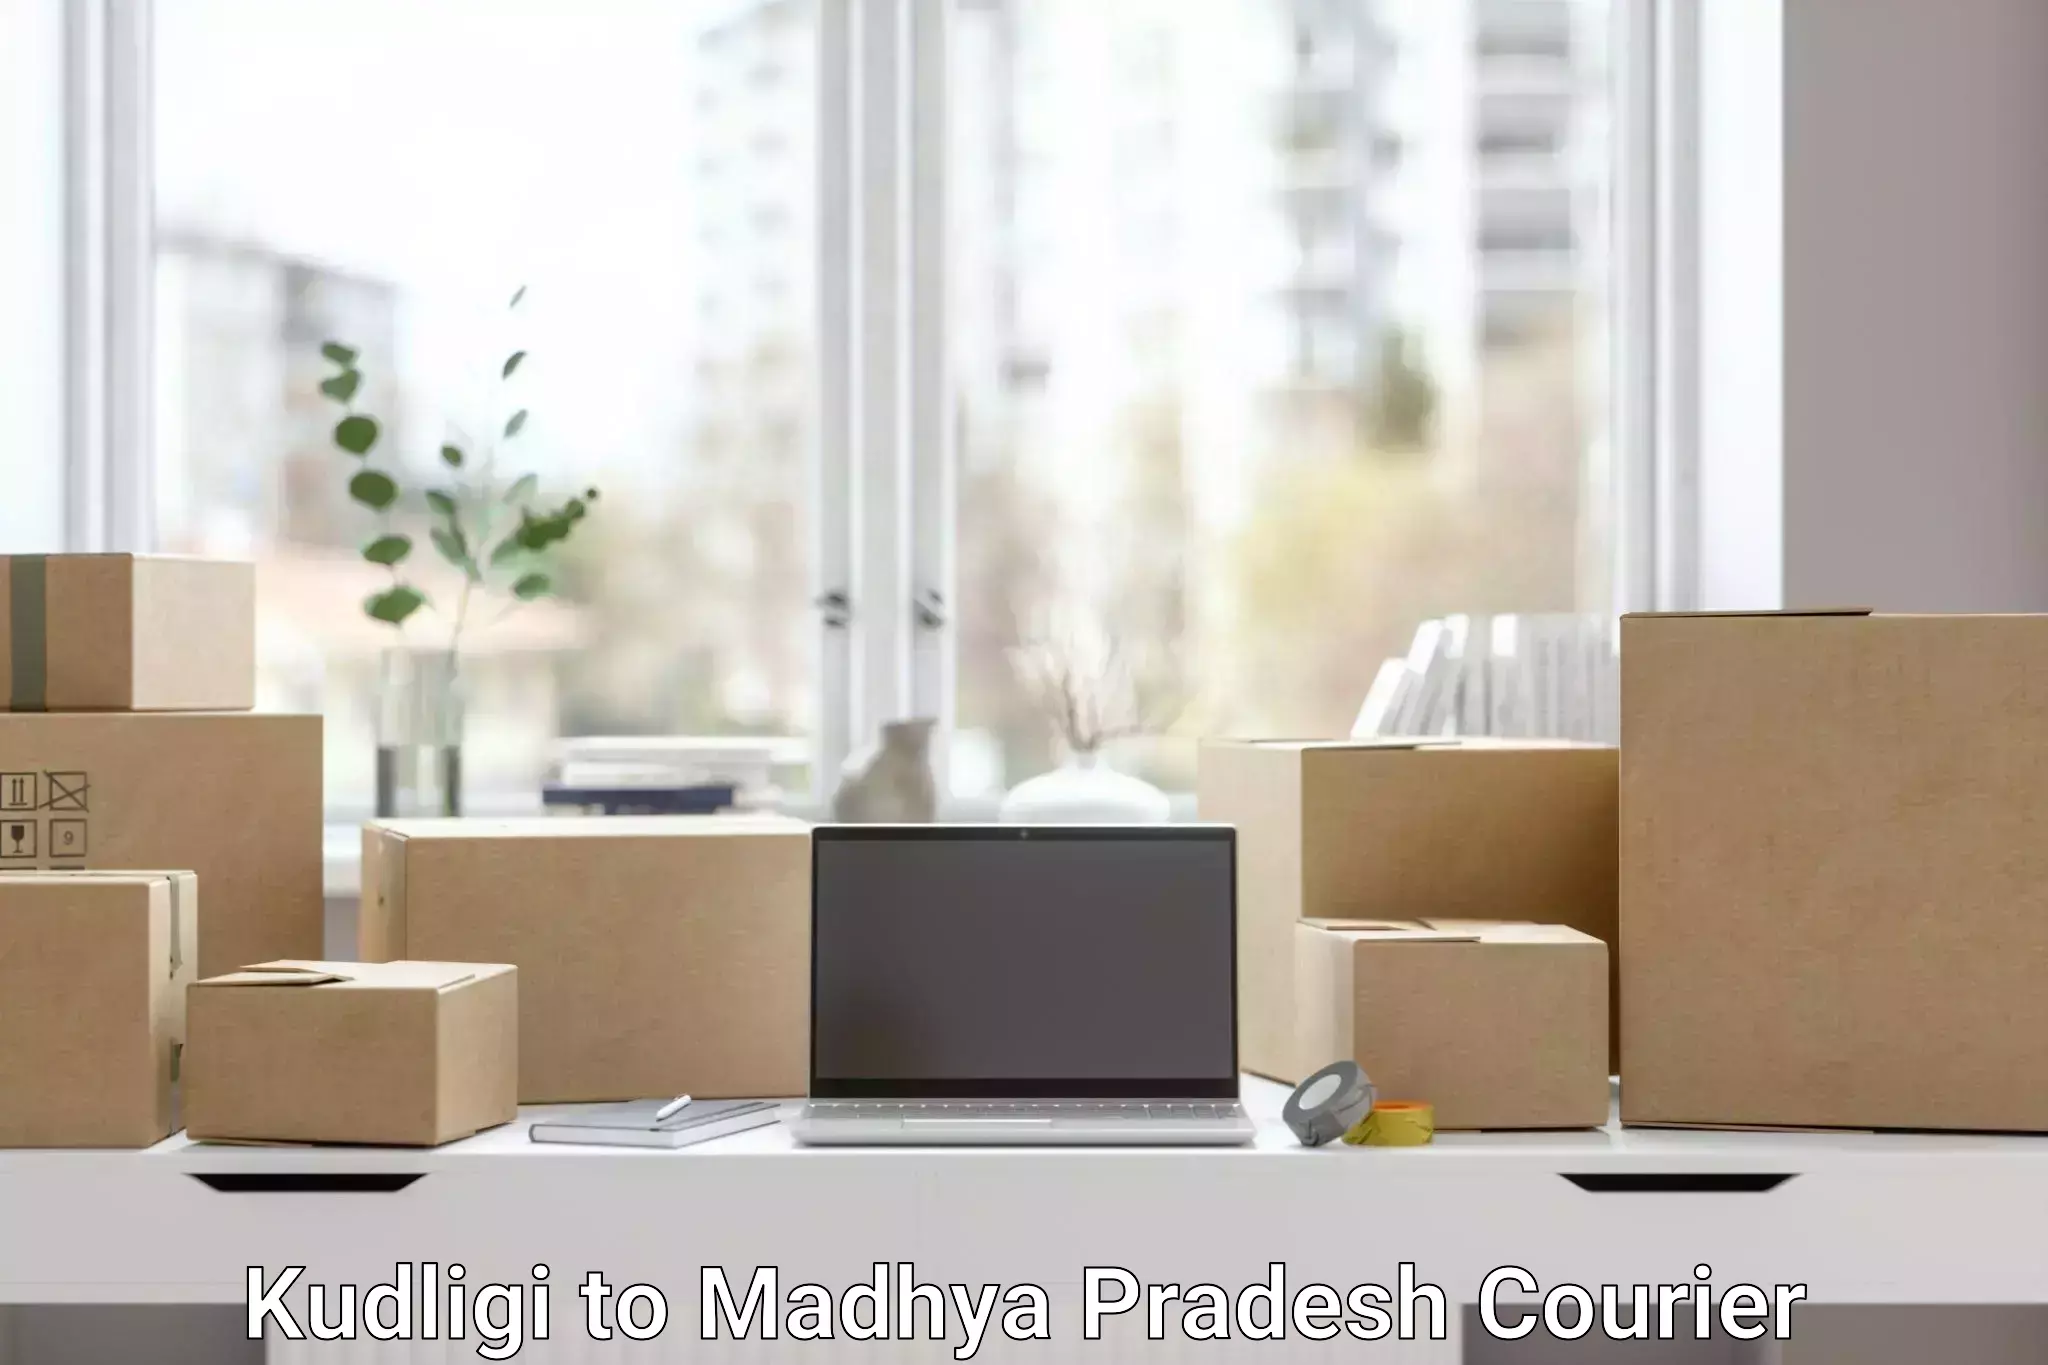 Premium courier solutions Kudligi to Nalkheda